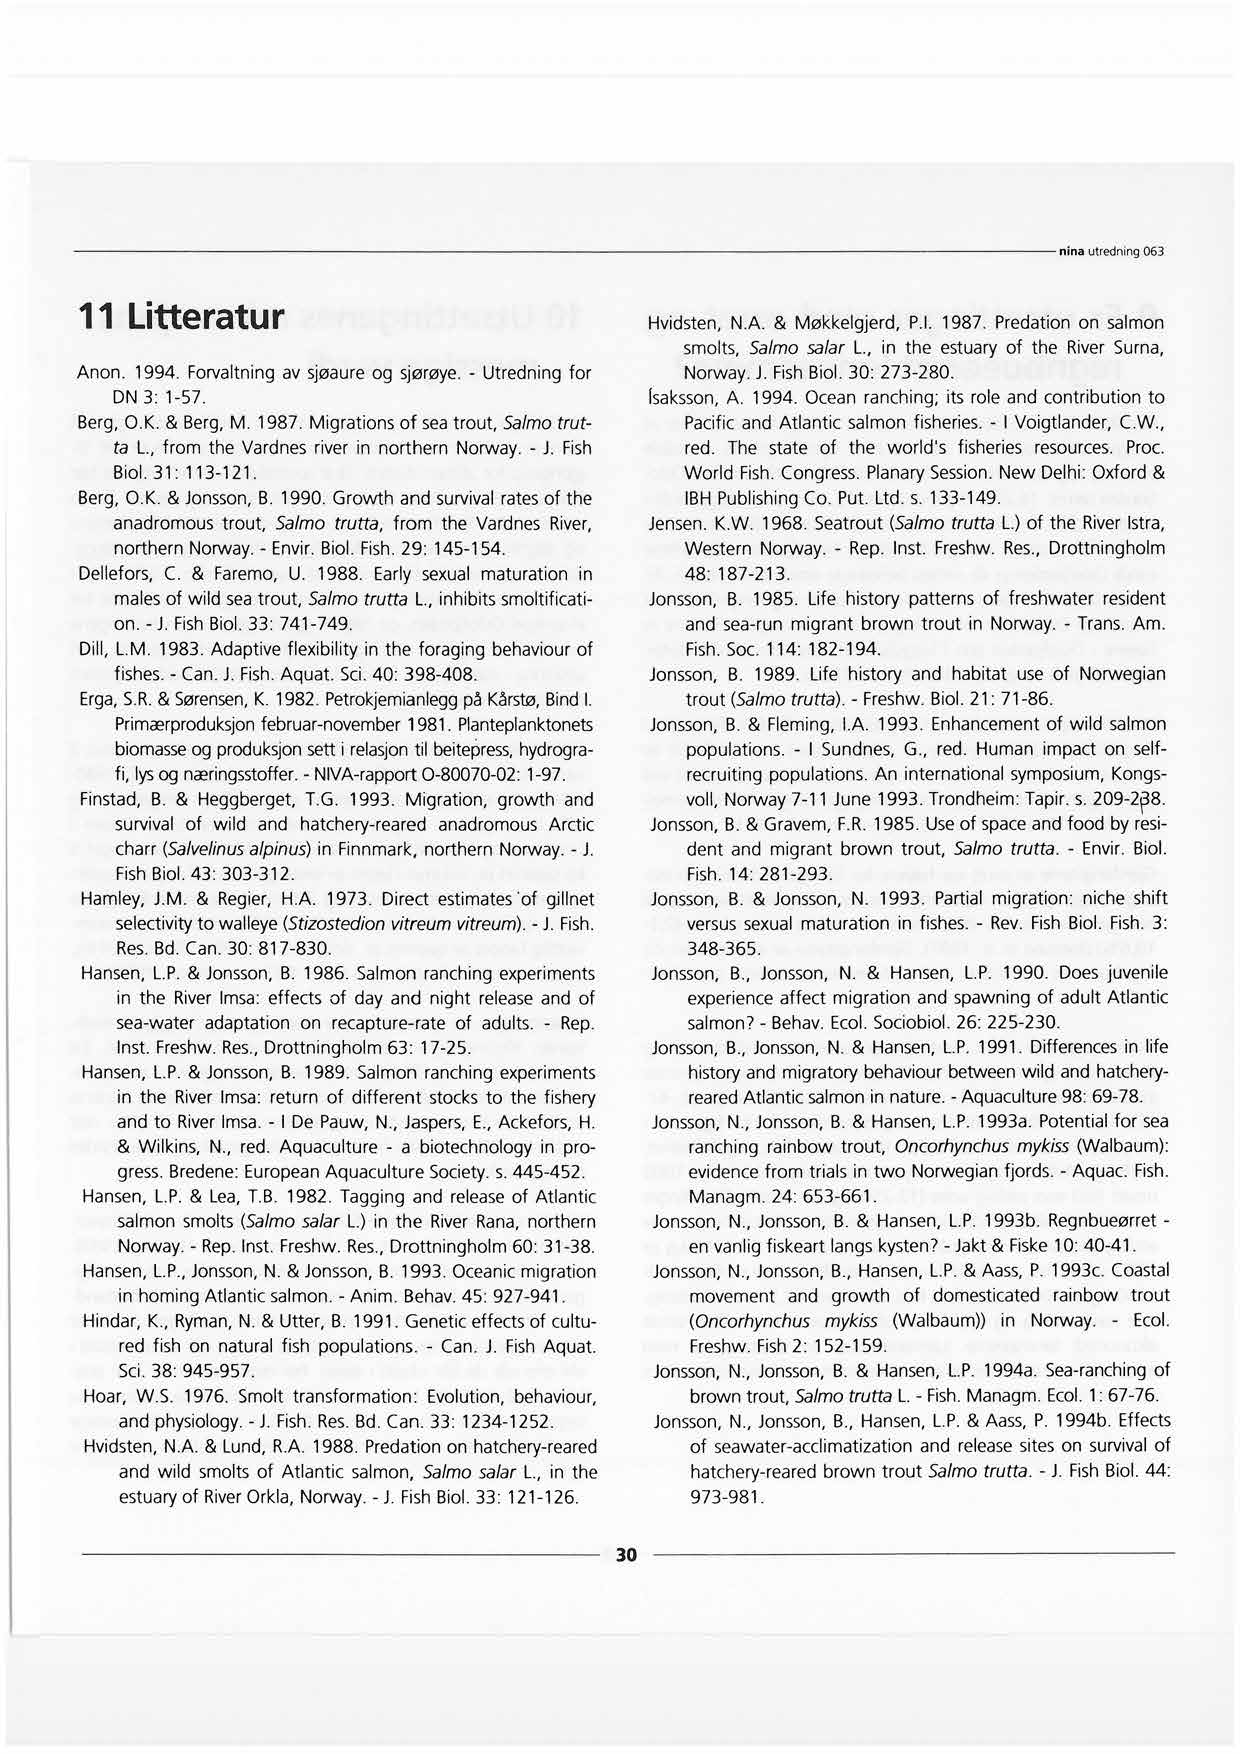 11 Litteratur Anon. 1994. Forvaltning av sjøaure og sjørøye. - Utredning for DN 3: 1-57. Berg, O.K. & Berg, M. 1987. Migrations of sea trout, Salmo trutta L., from the Vardnes river in northern Biol.